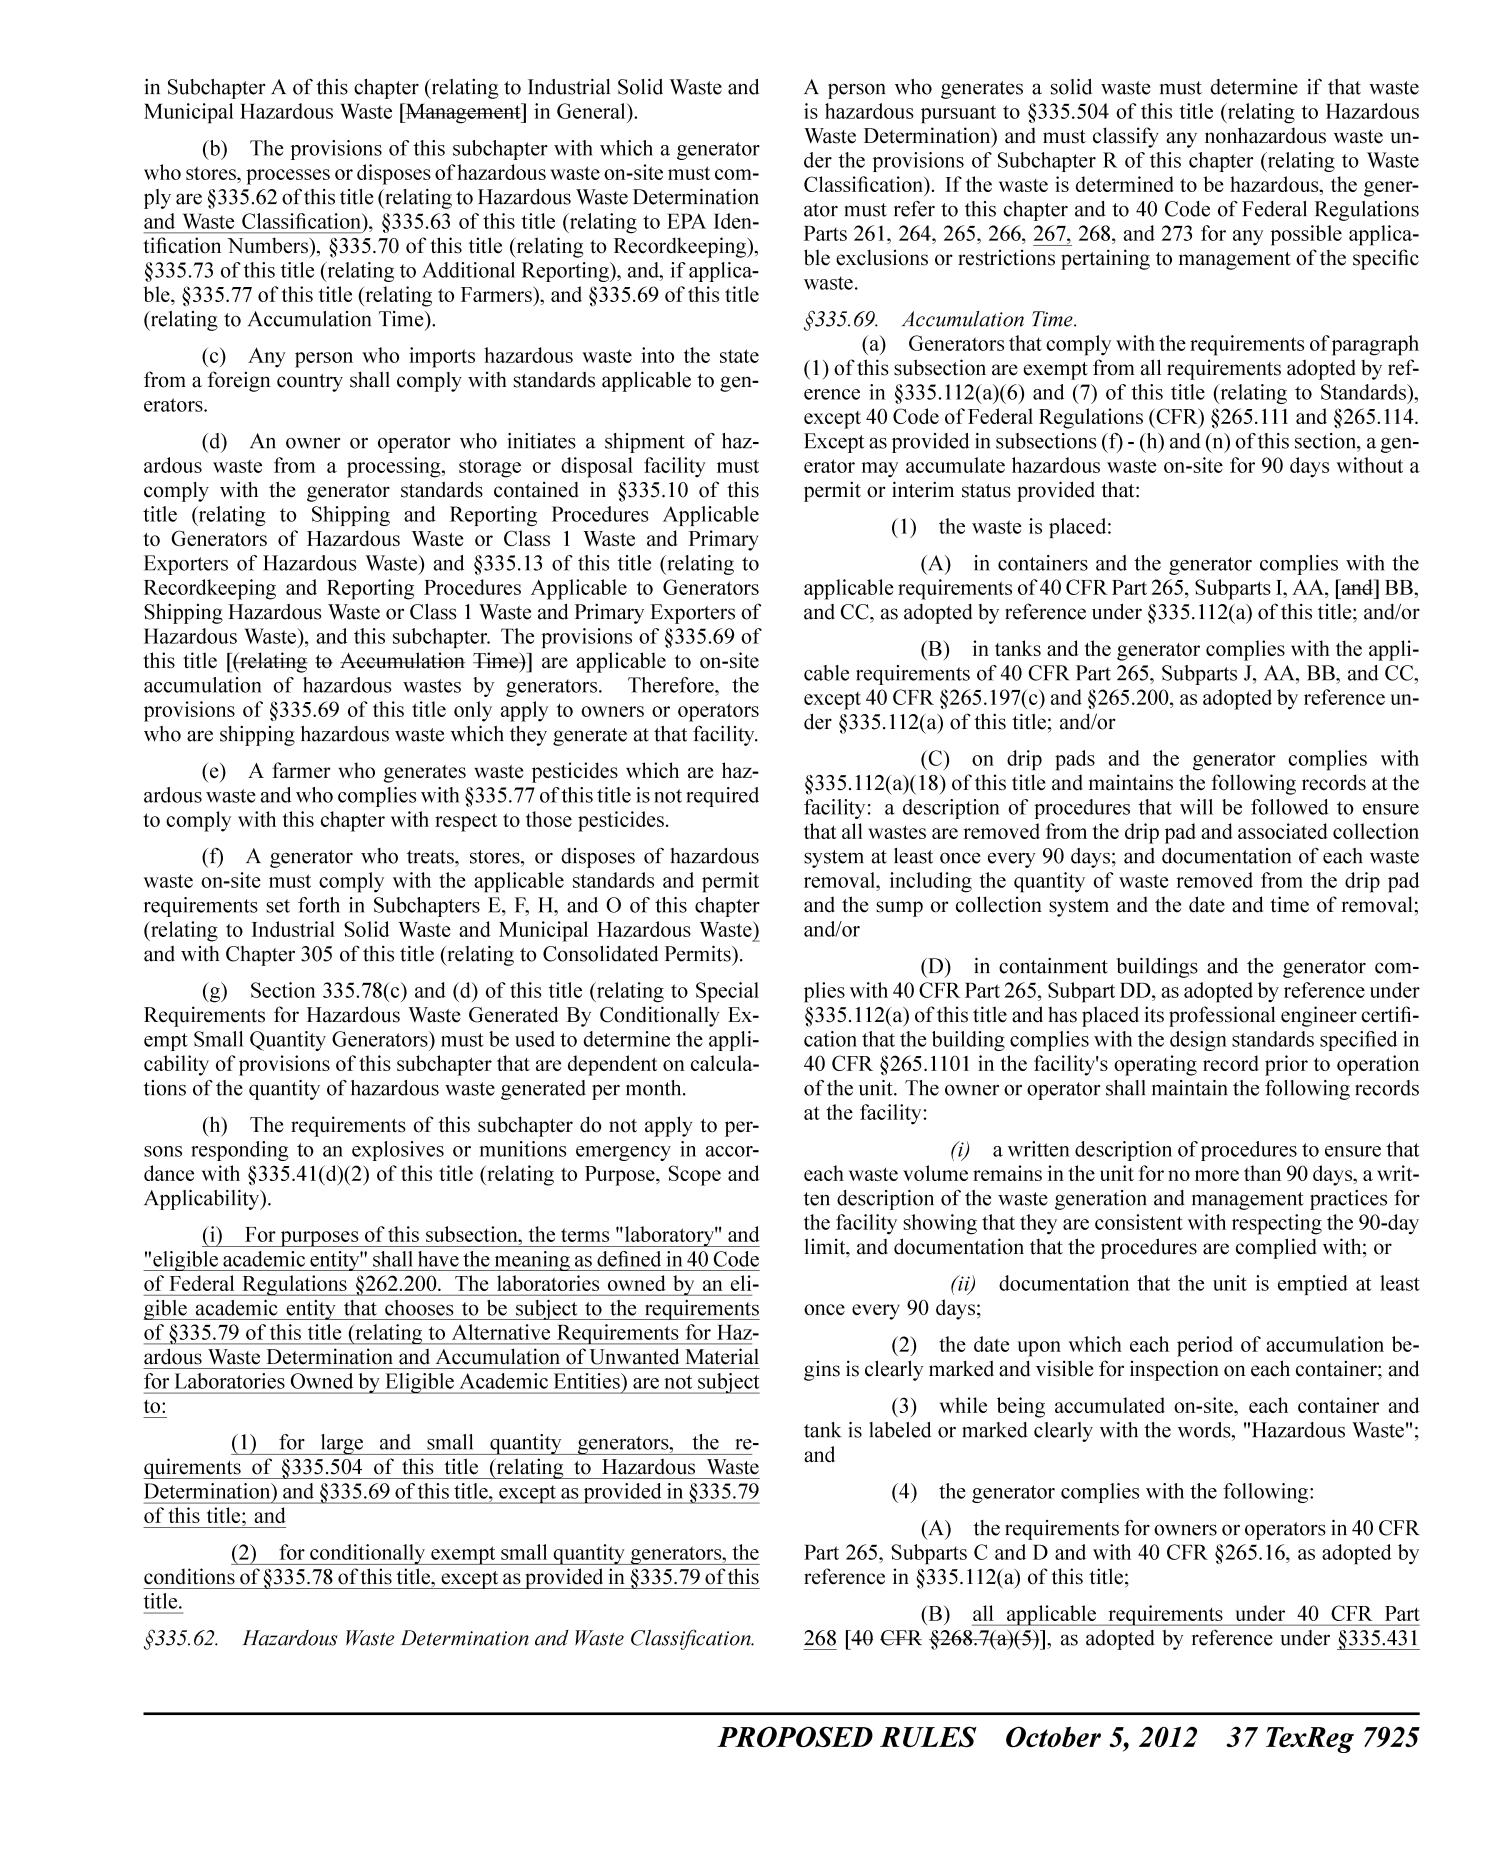 Texas Register, Volume 37, Number 40, Pages 7815-8094, October 5, 2012
                                                
                                                    7925
                                                